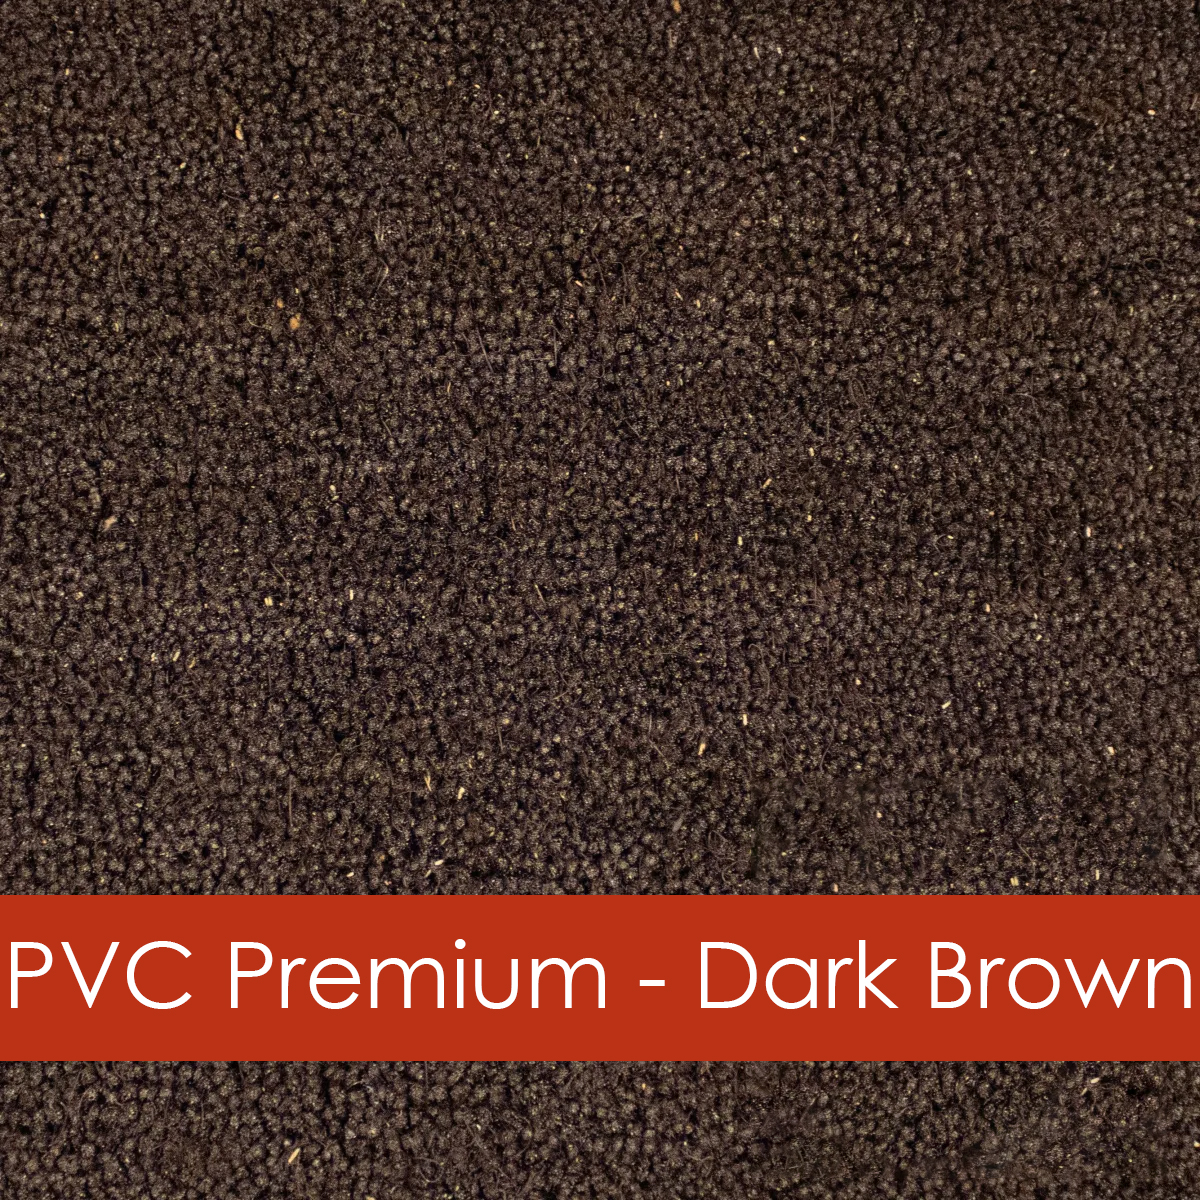 Dark brown PVC backed coir premium grade